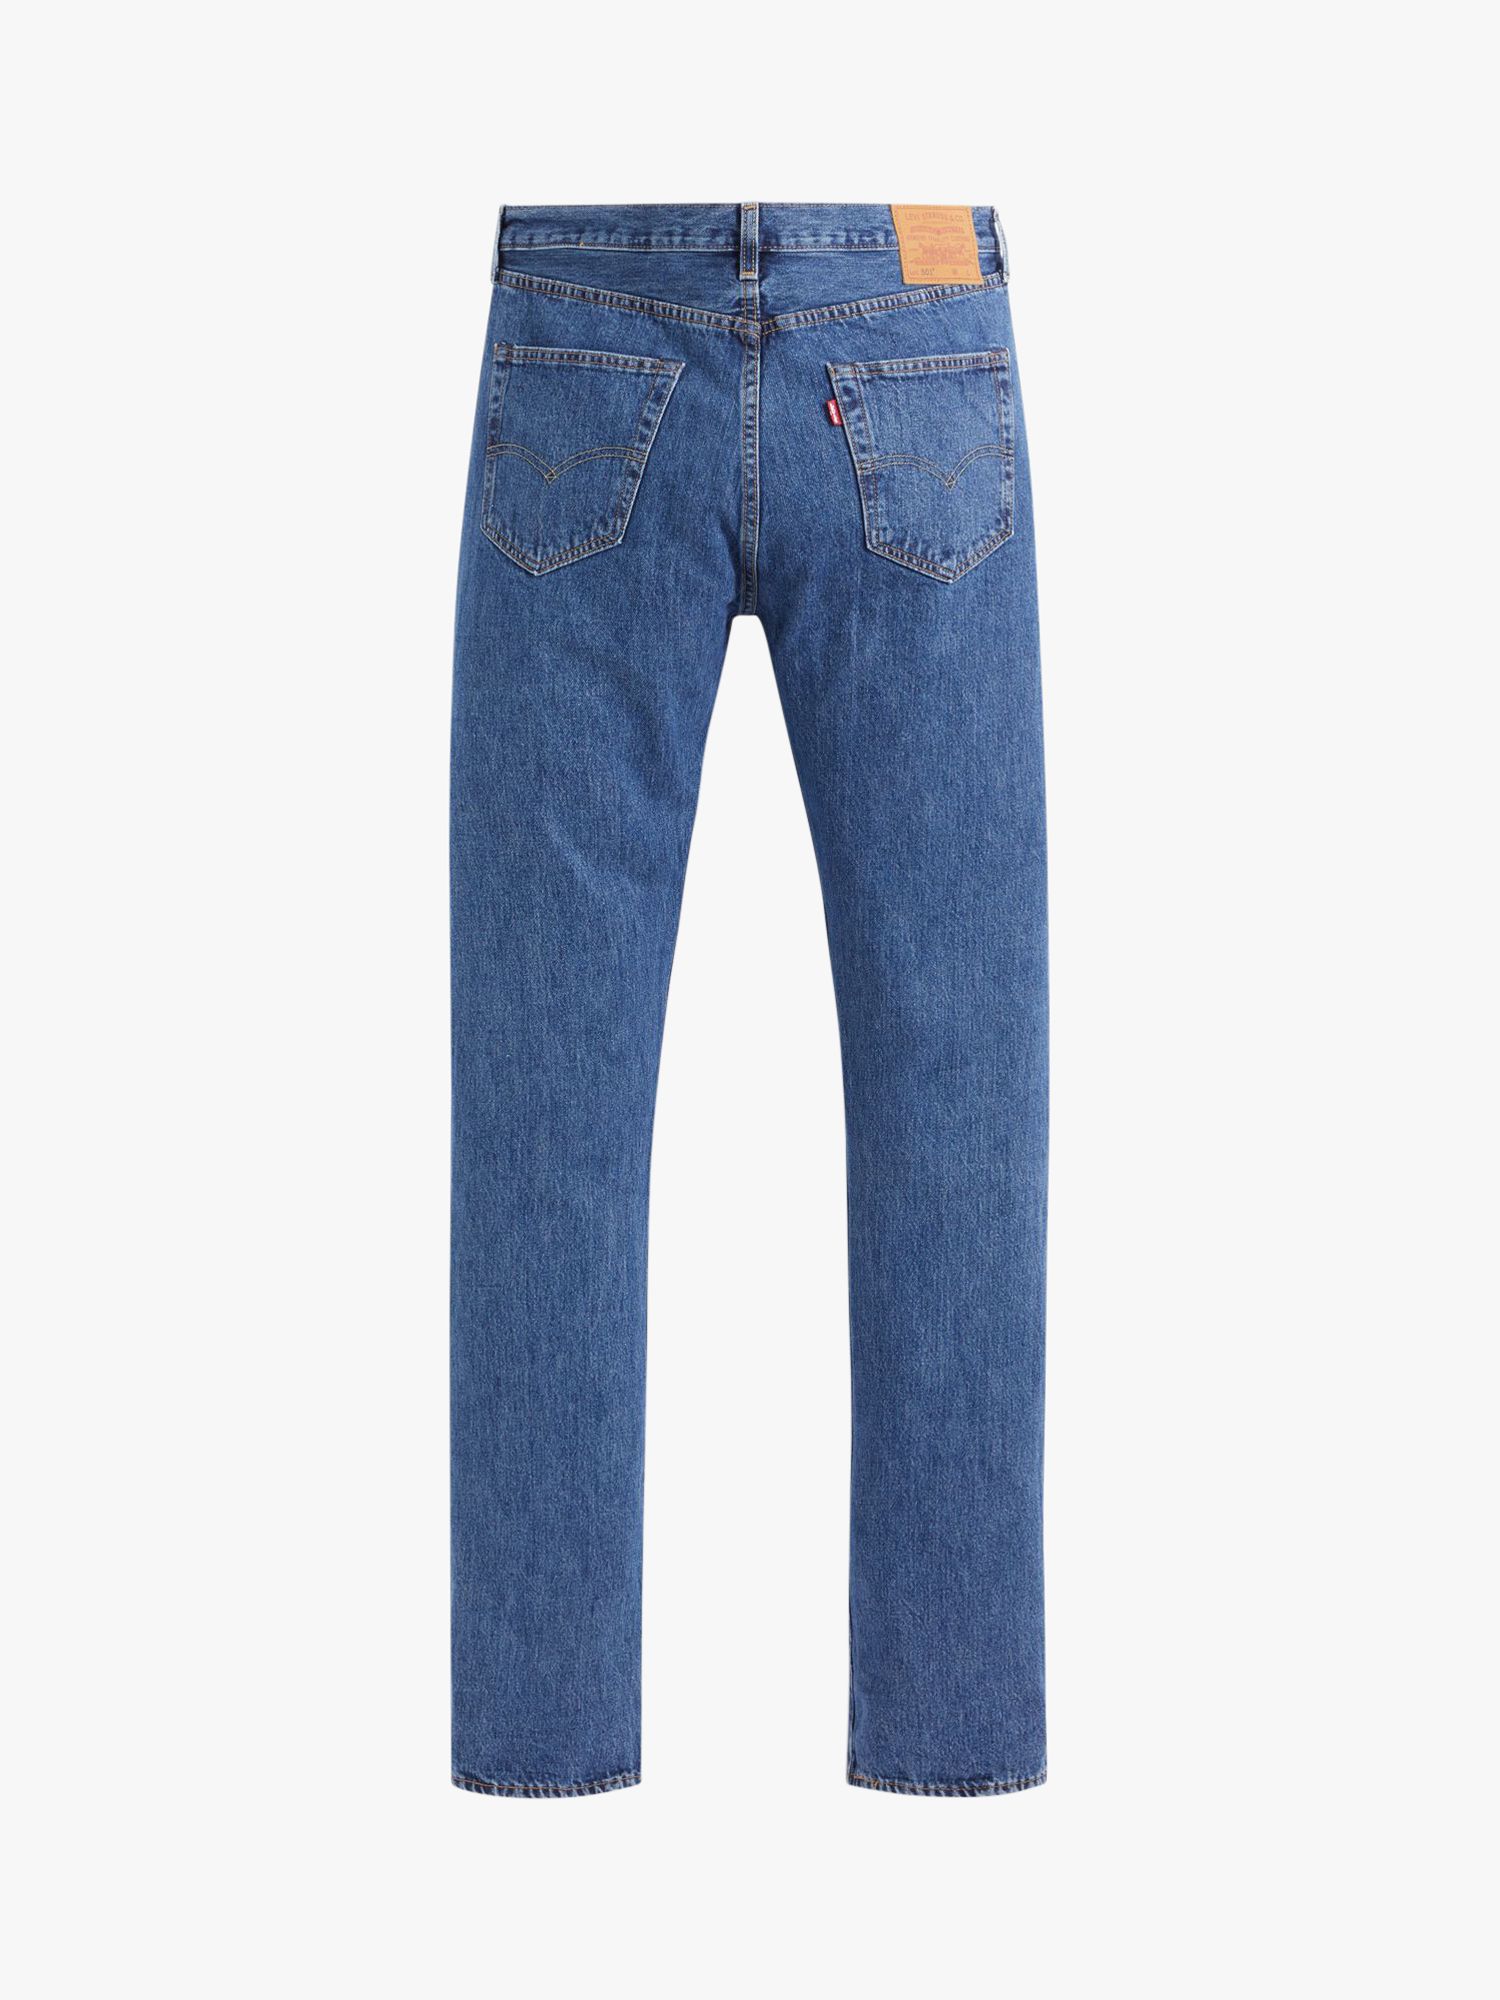 Levi's Big & Tall 501 Original Straight Jeans, Stonewash, 44R